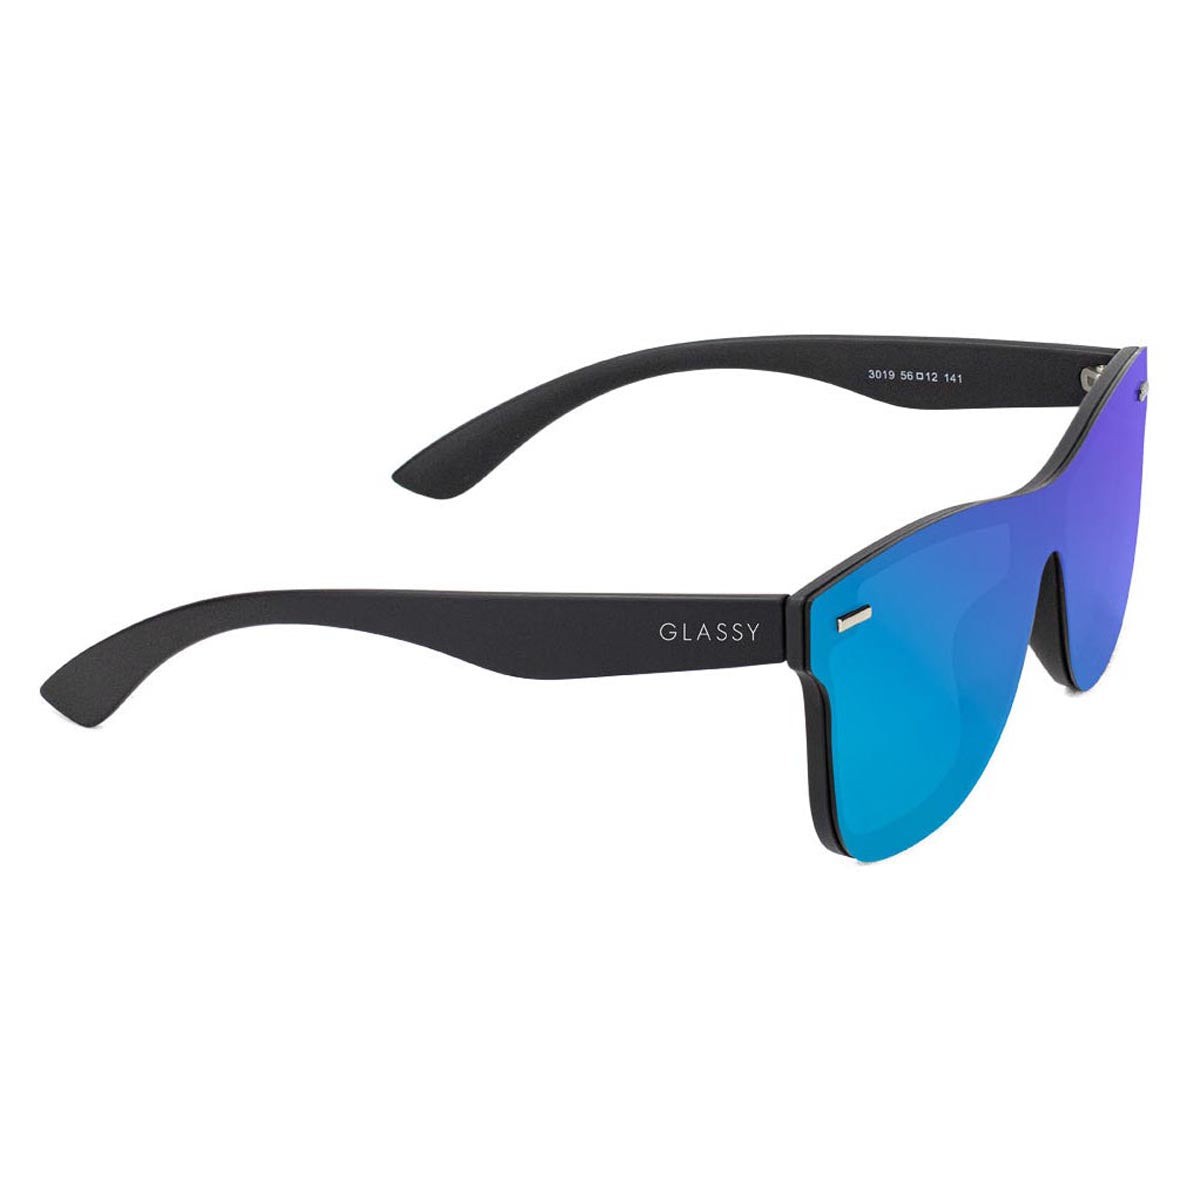 Glassy Leo Premium Polarized Sunglasses - Black/Blue Mirror image 2